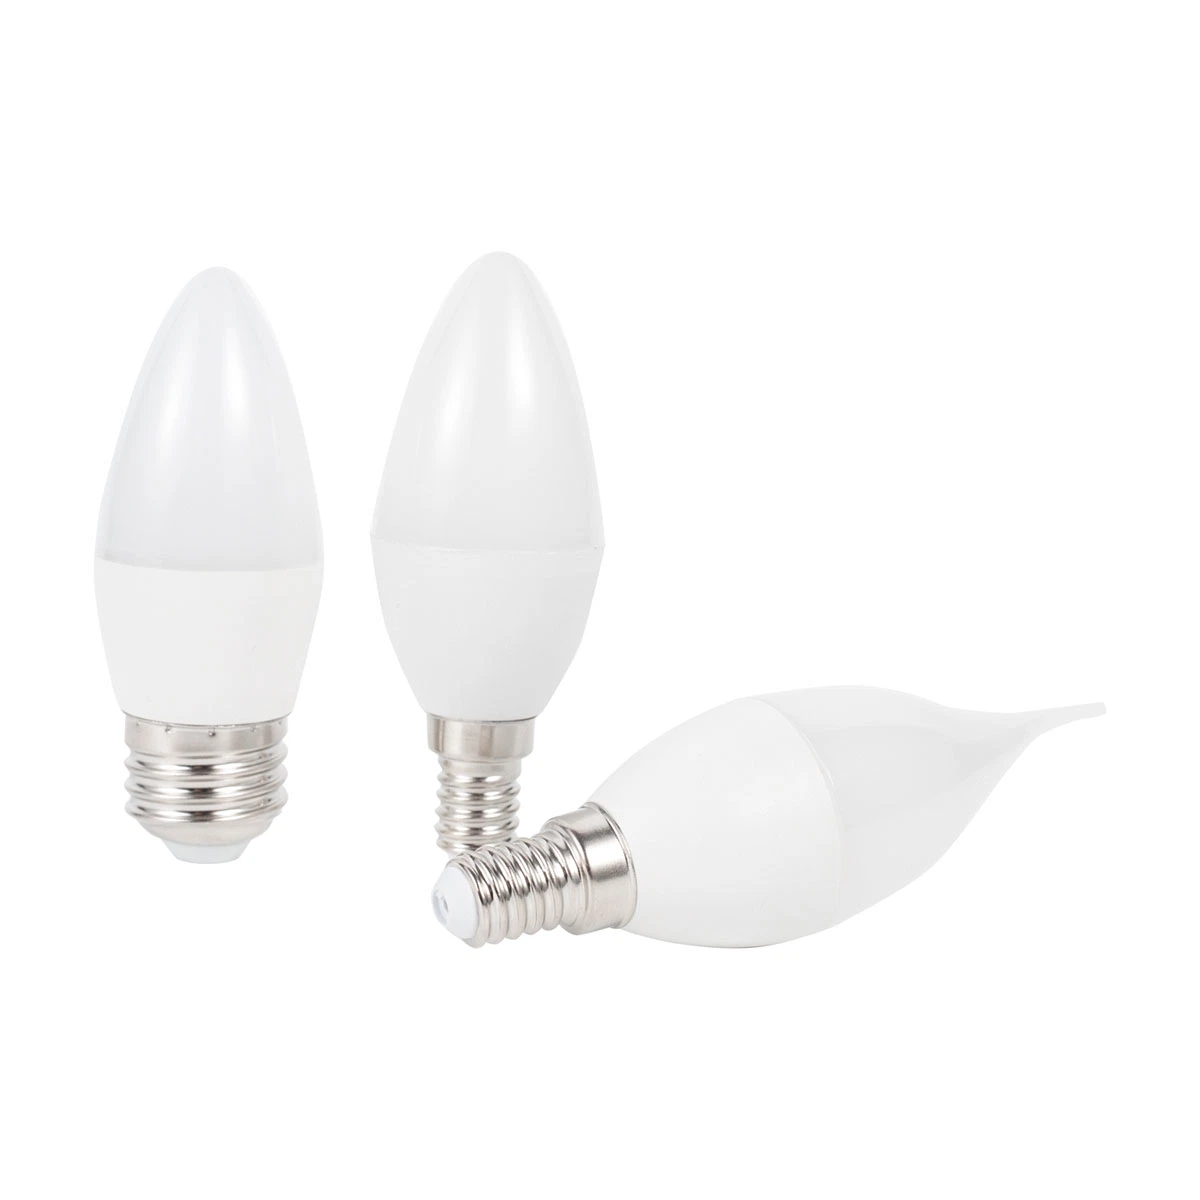 Neue LED Glühlampe Kerze E14 LED Lampe LED Glühlampe 4W 5W 6W 8W für die Beleuchtung zu Hause